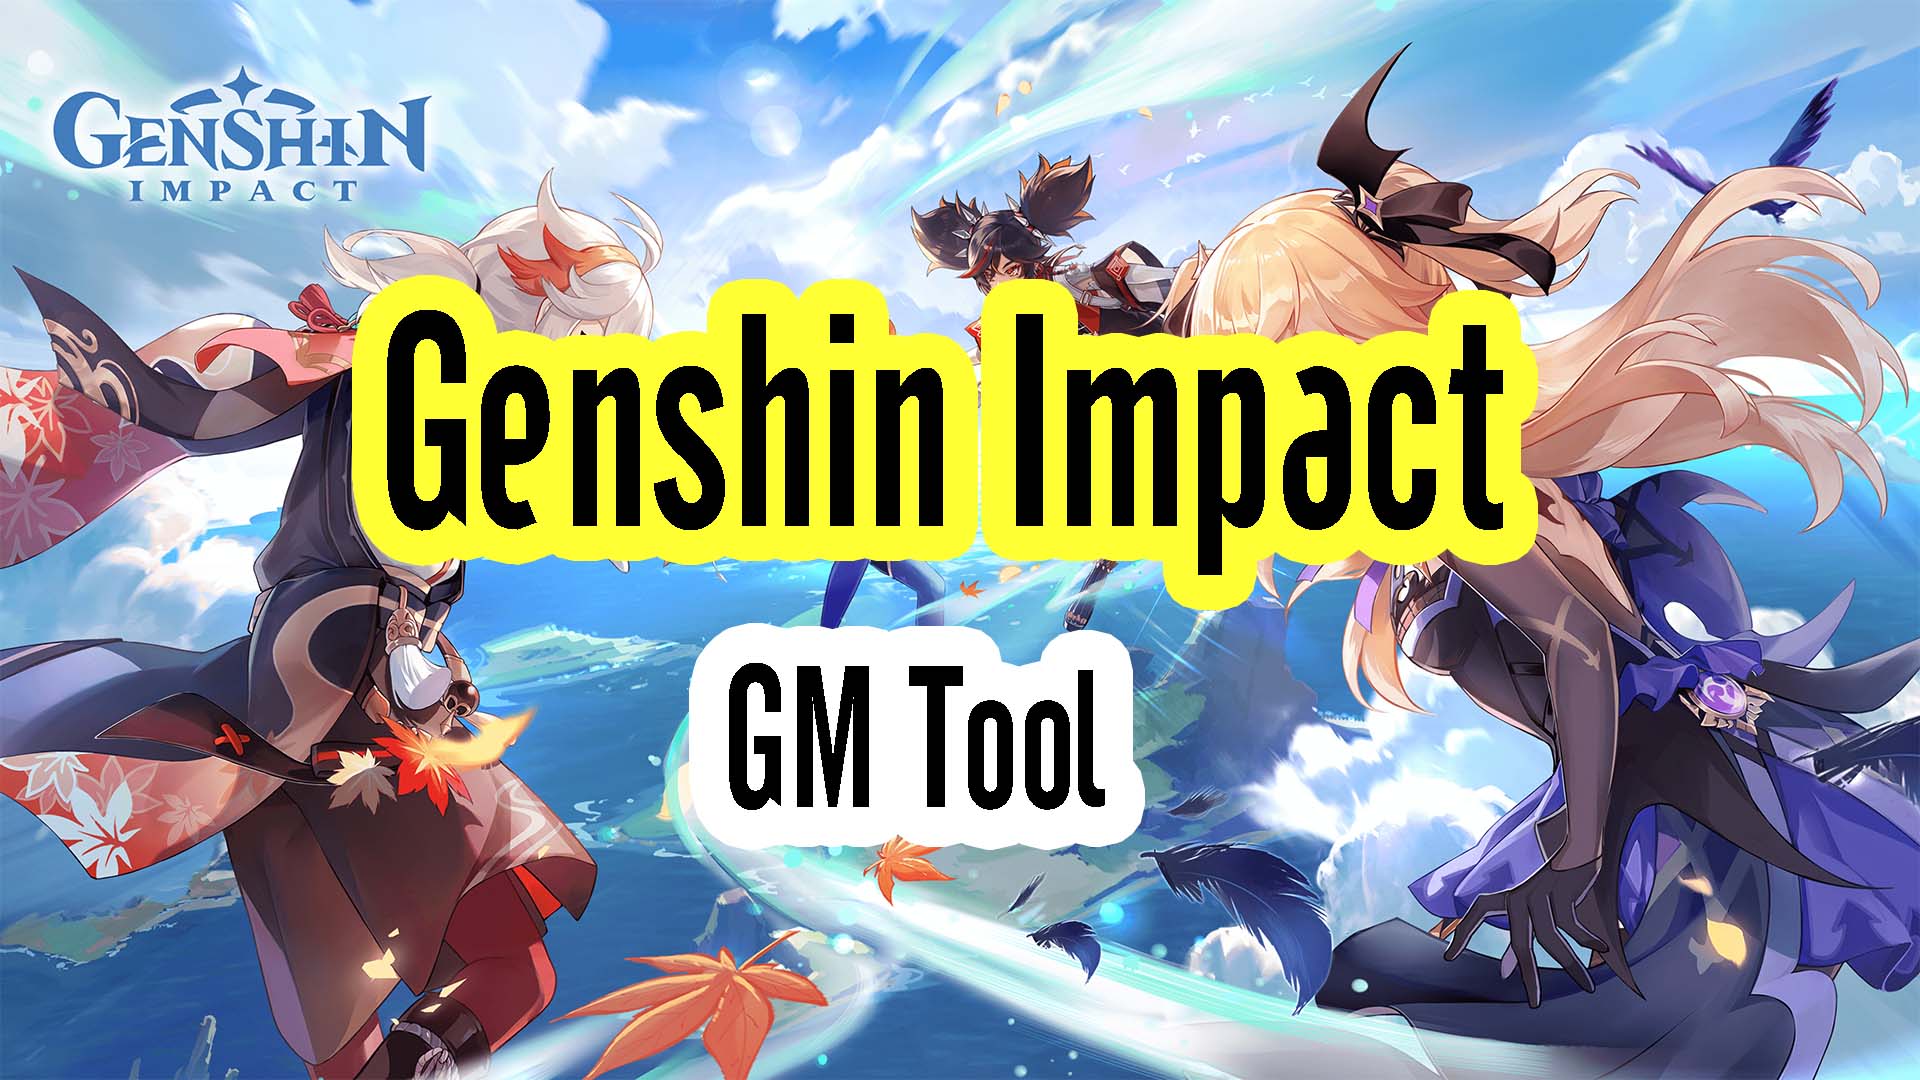 Genshin Impact Version 2 8 3840x2160 357d3d64d056 Copy